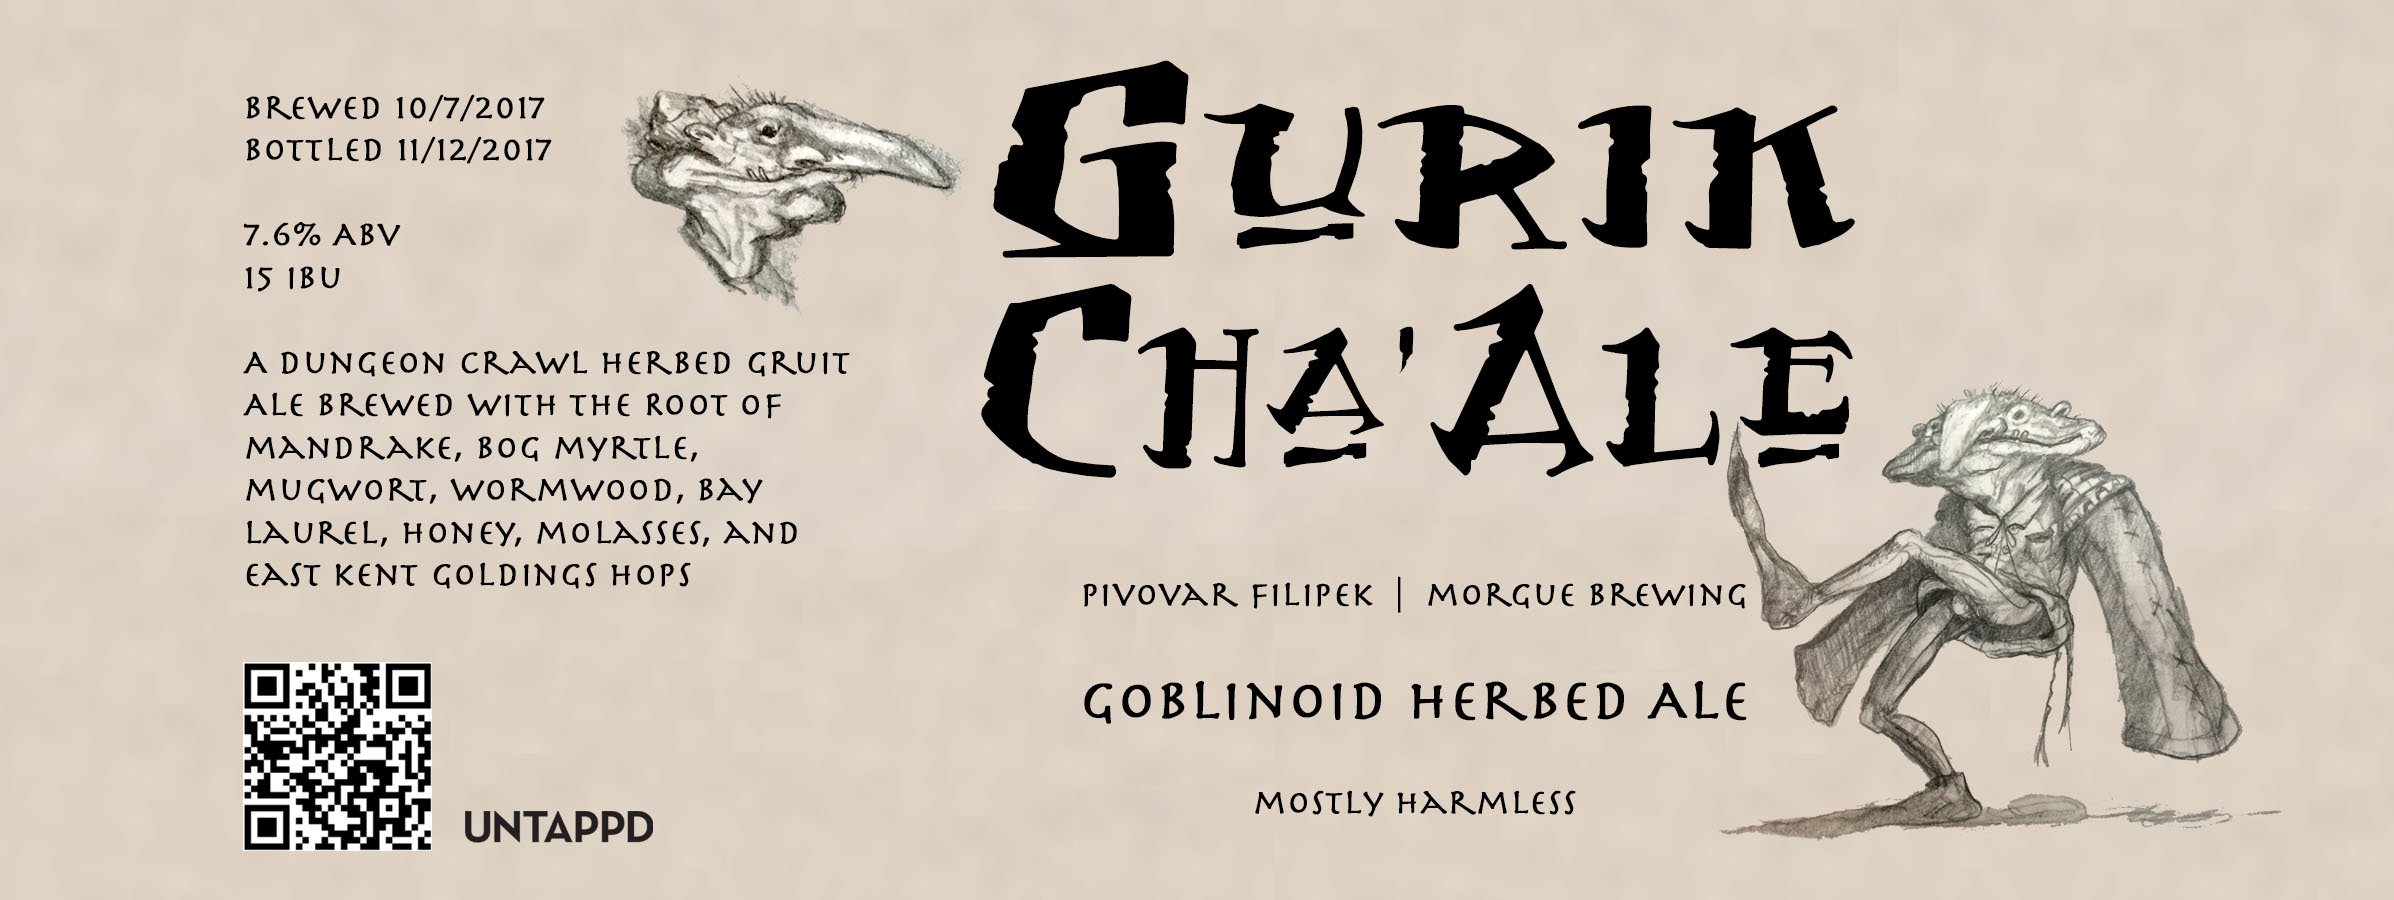 Gurik Cha'Ale